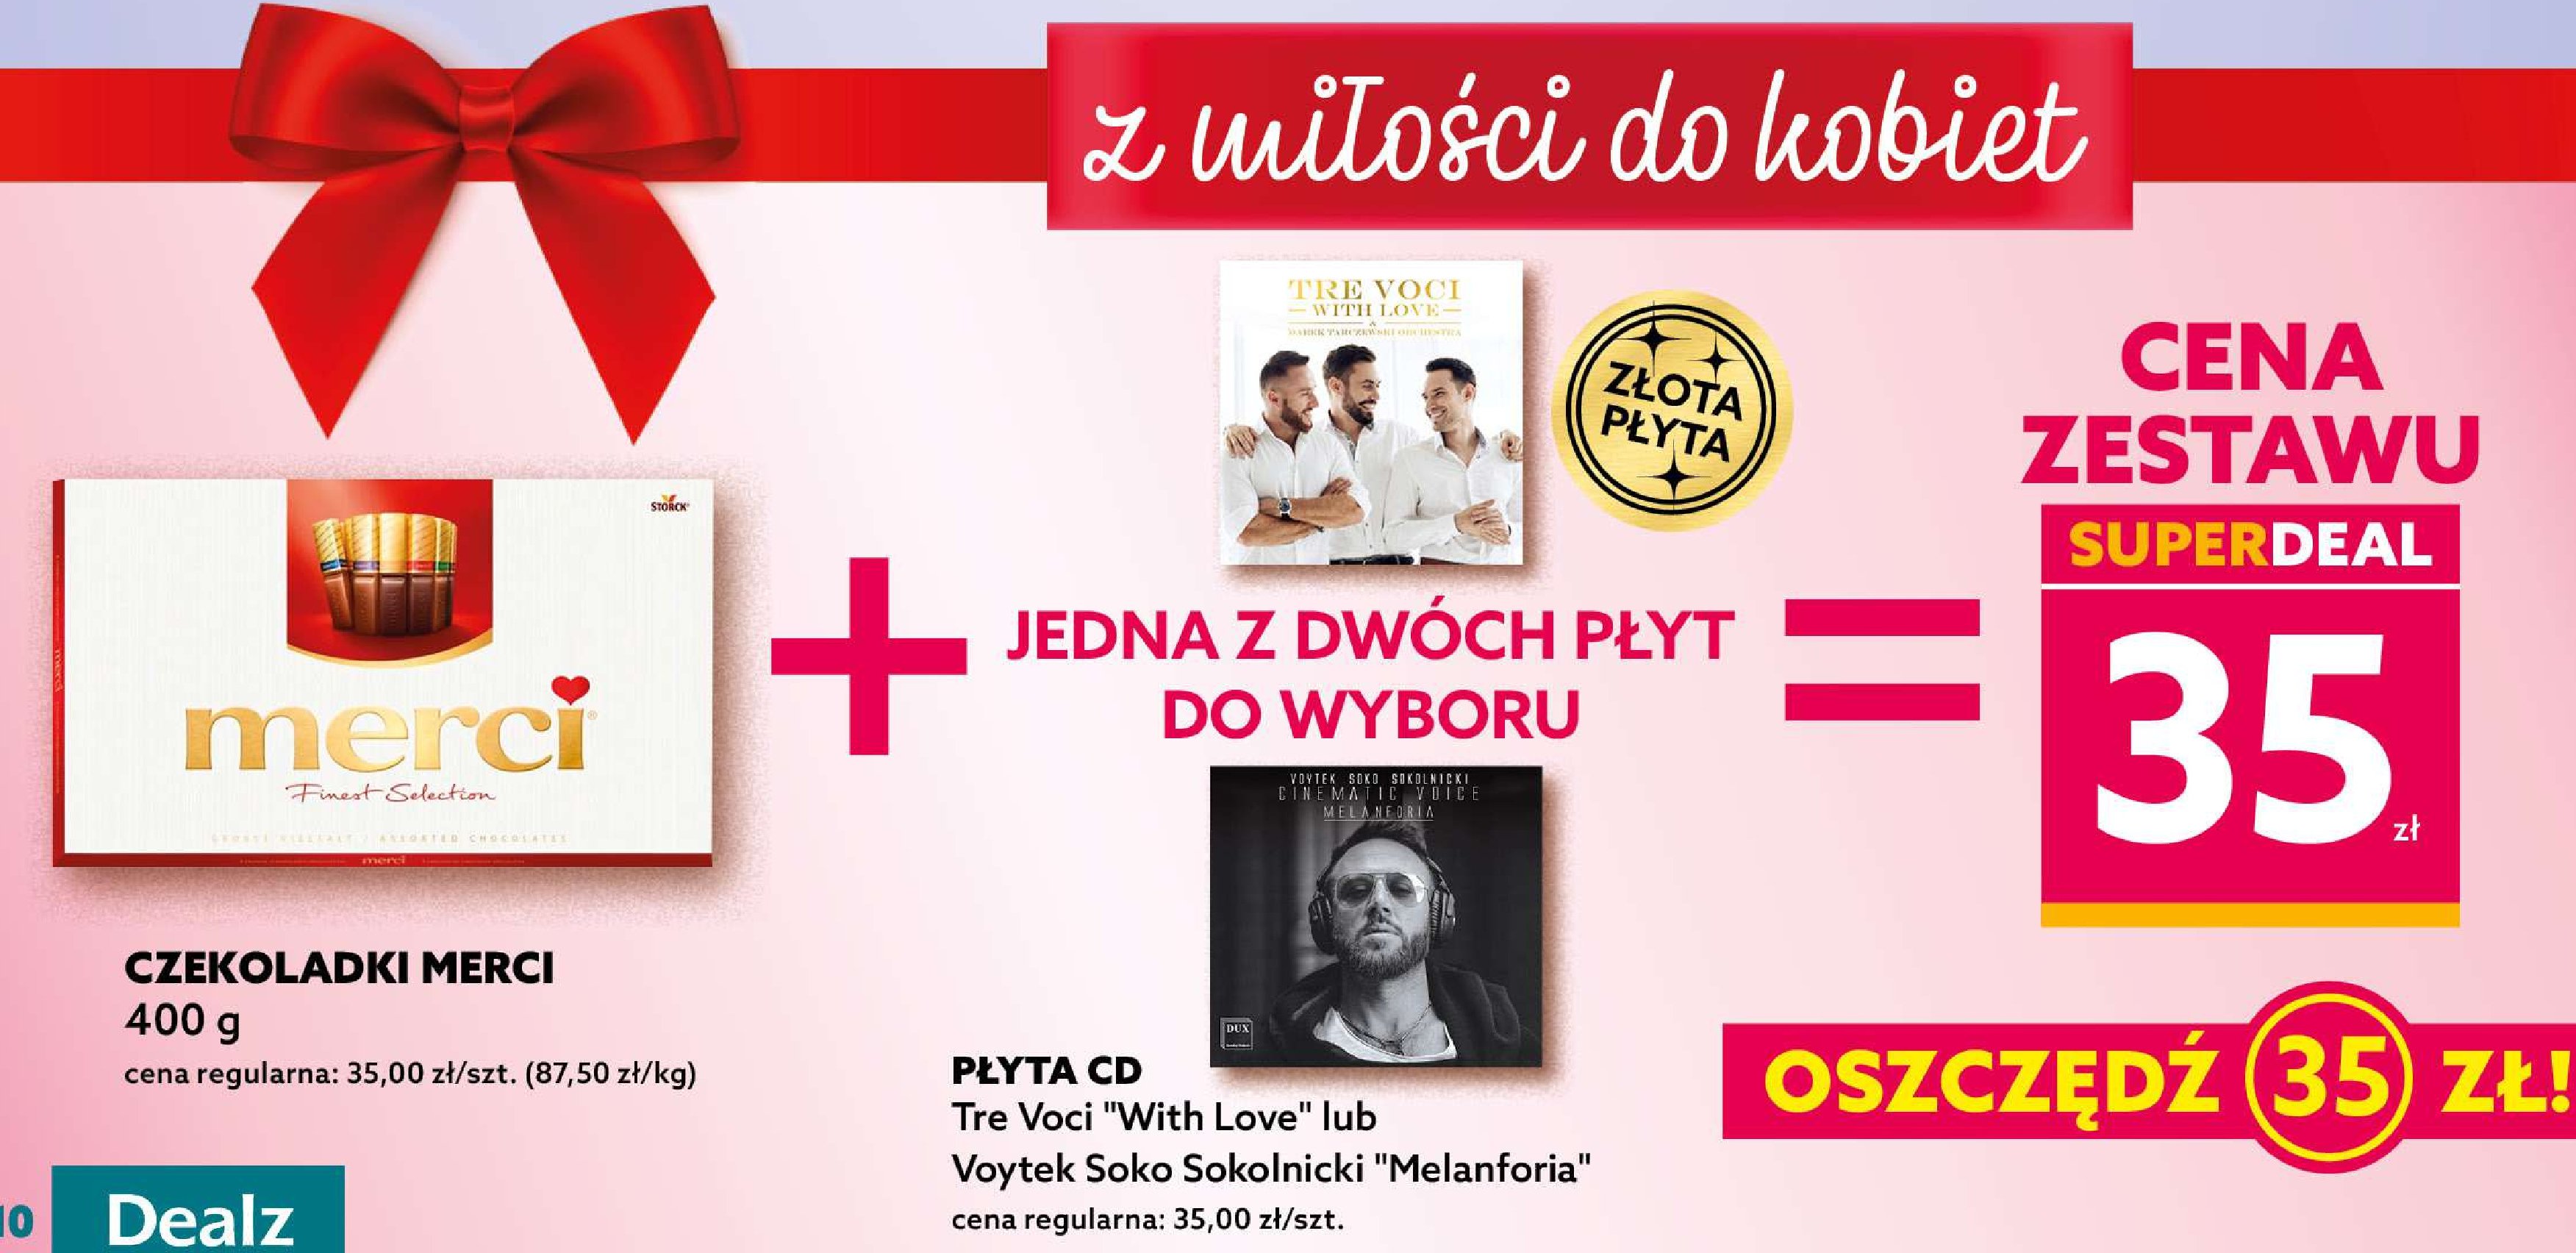 Tre voci "with love" promocja